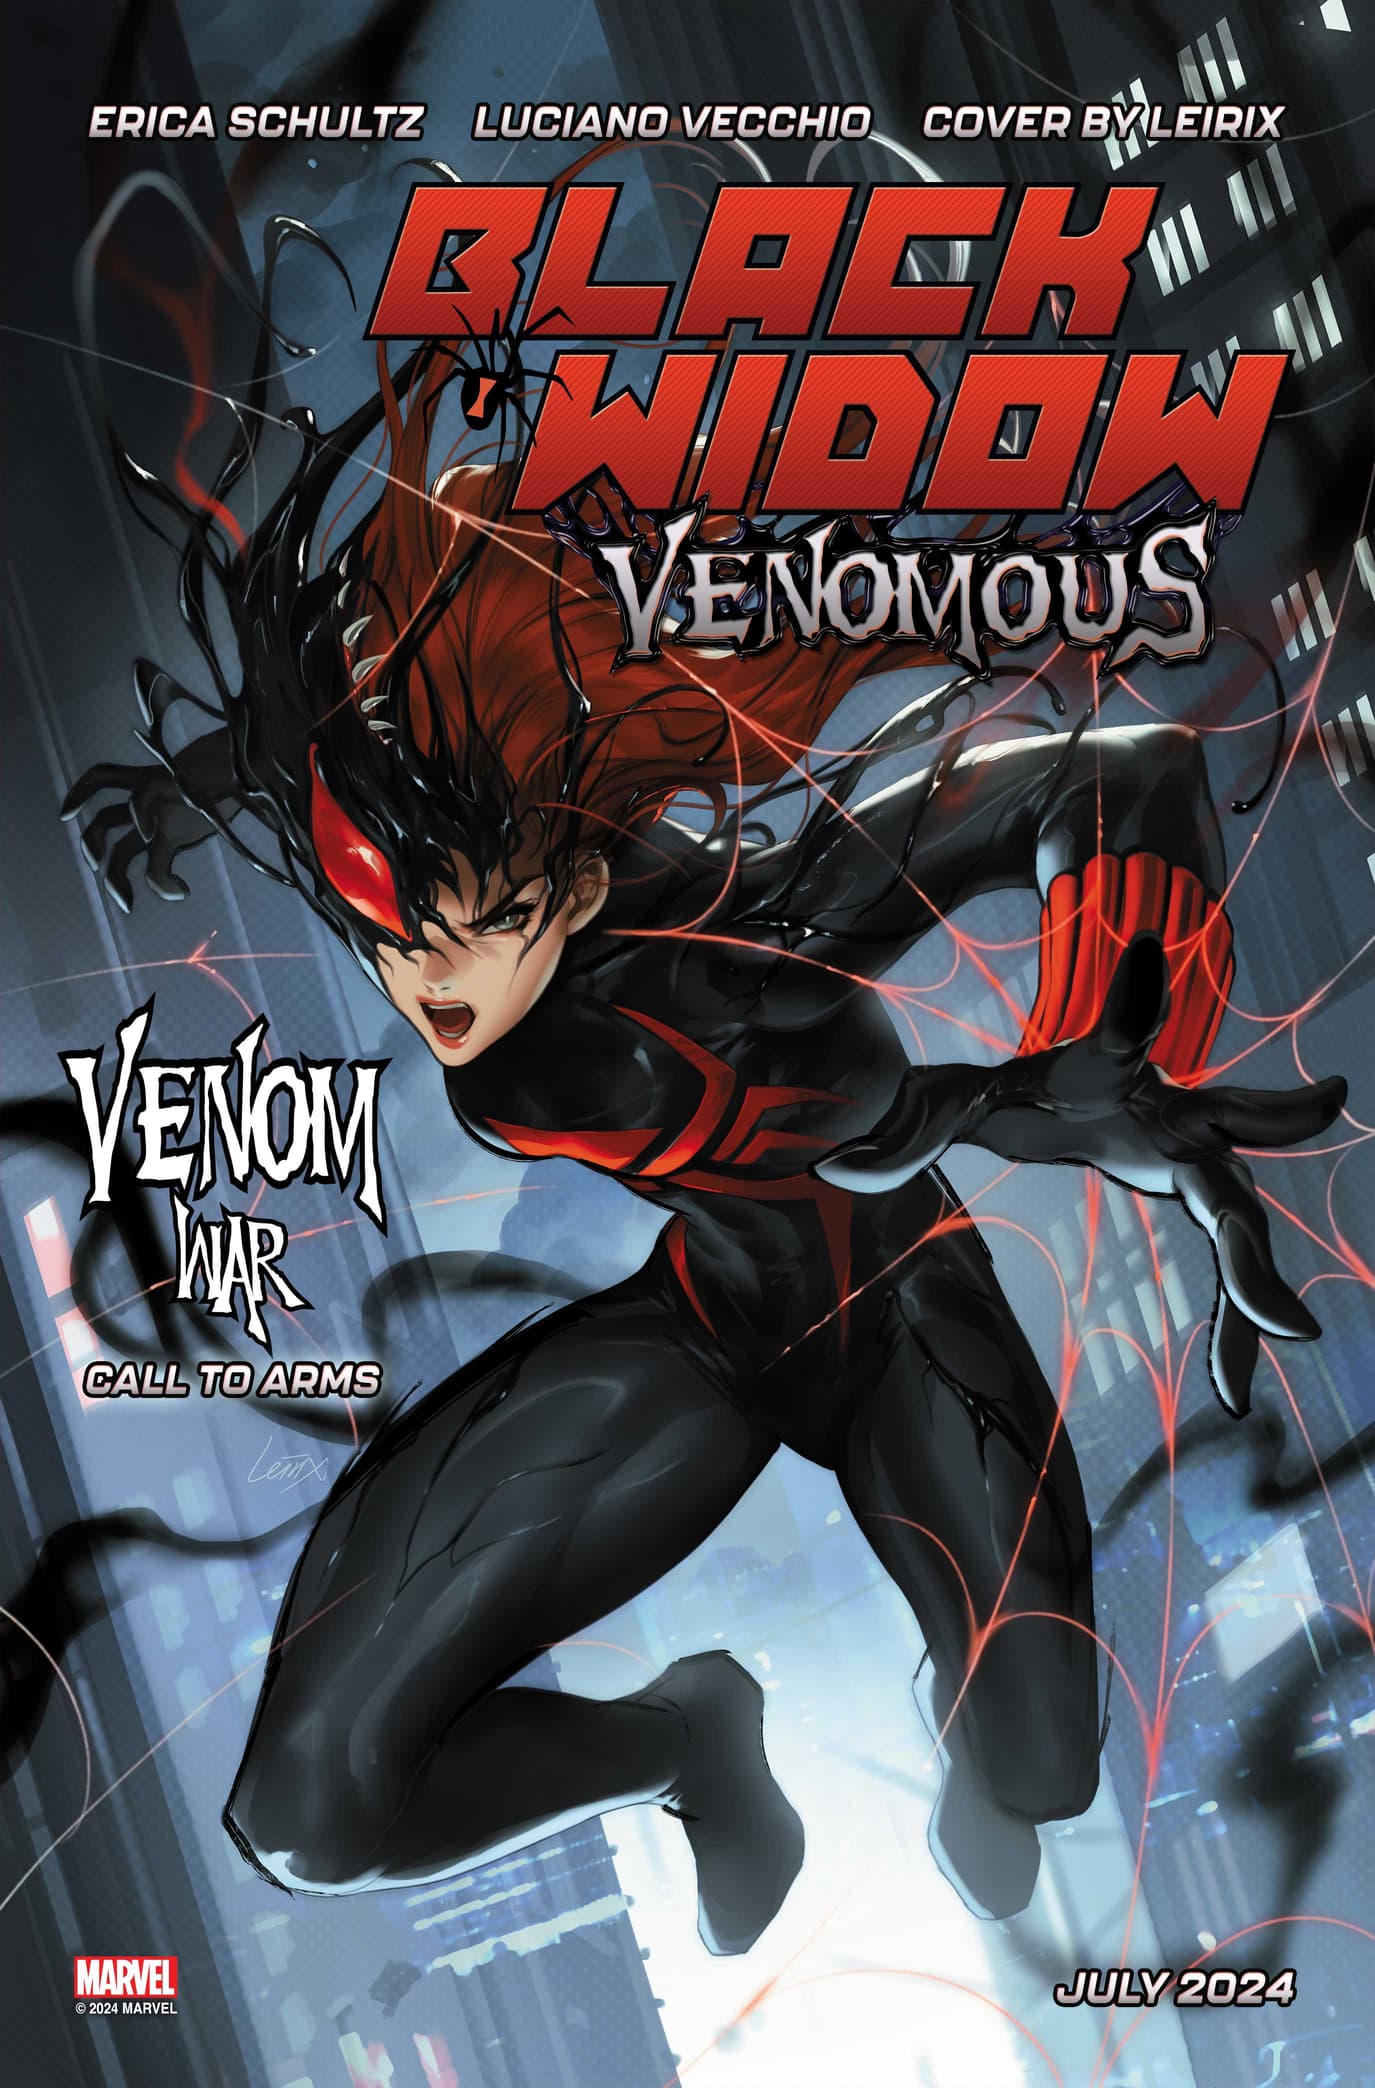 BLACK WIDOW: VENOMOUS #1 cover by Leirix